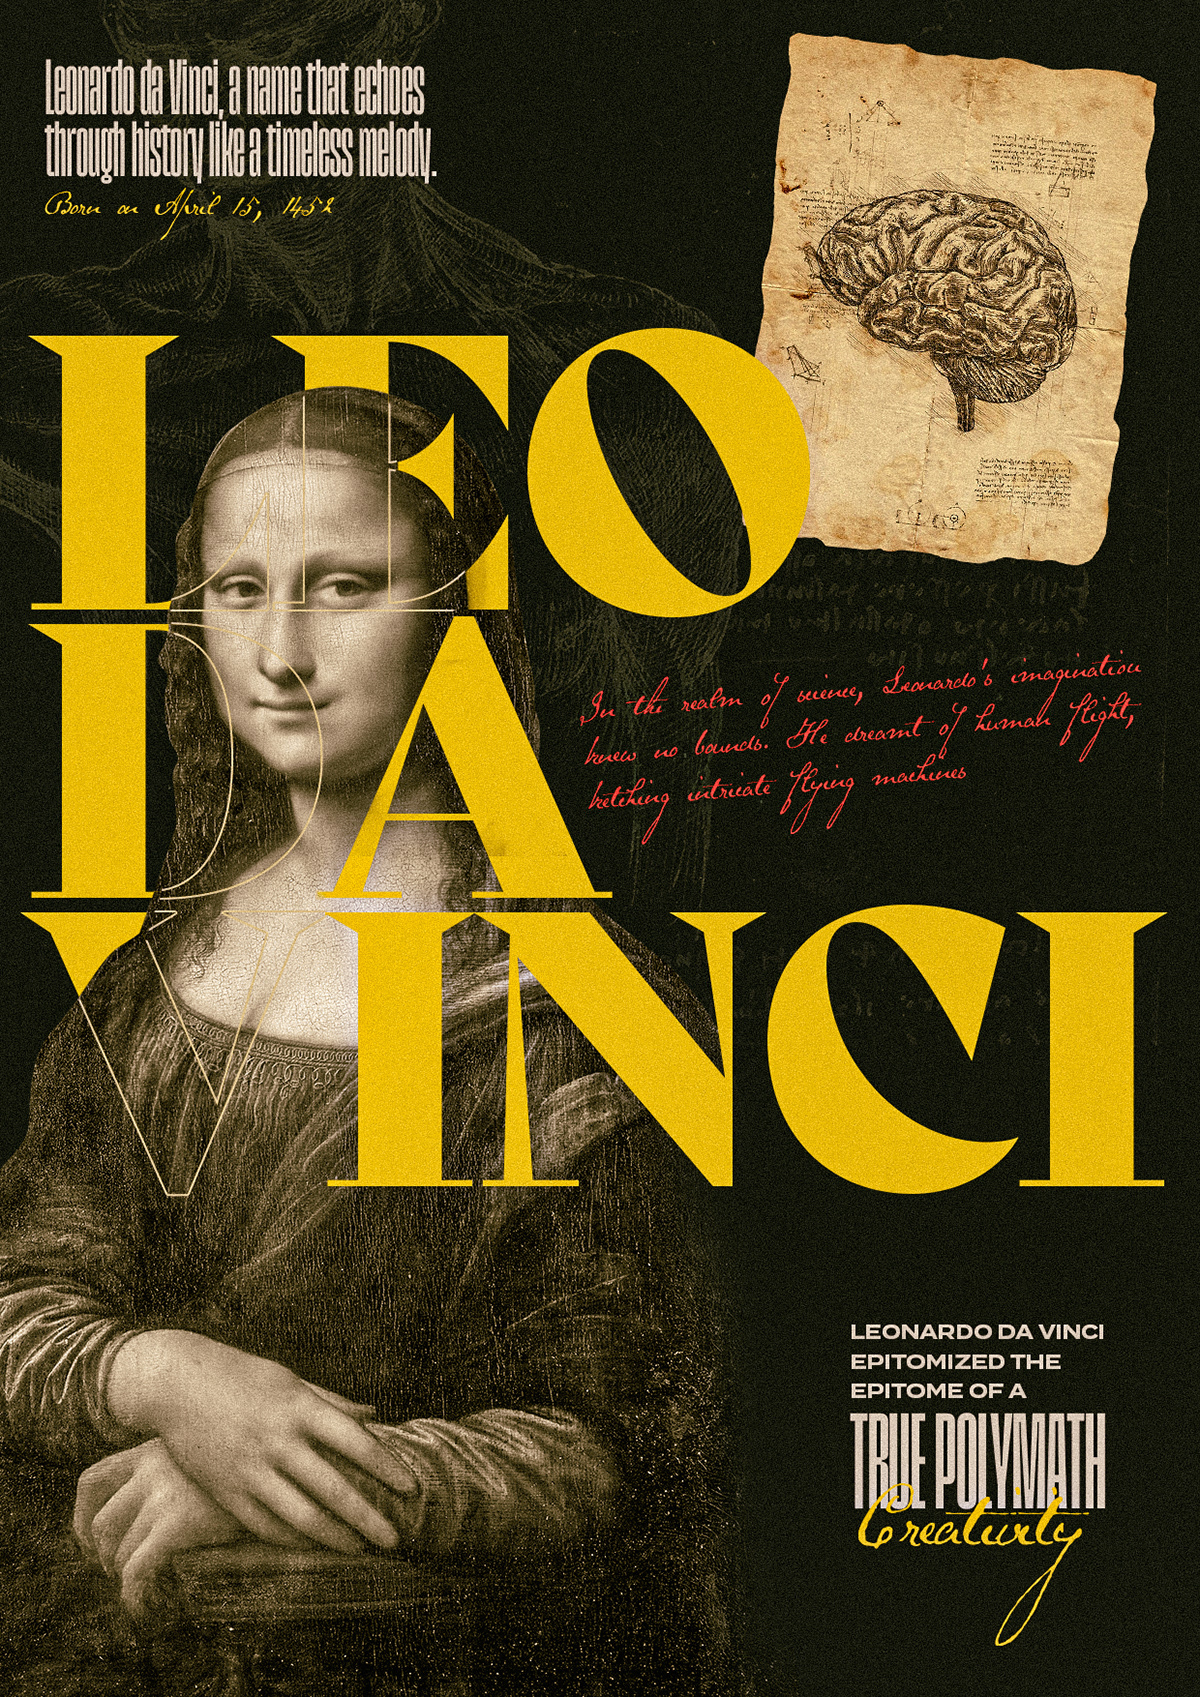 Leonardo Da Vinci Poster Design